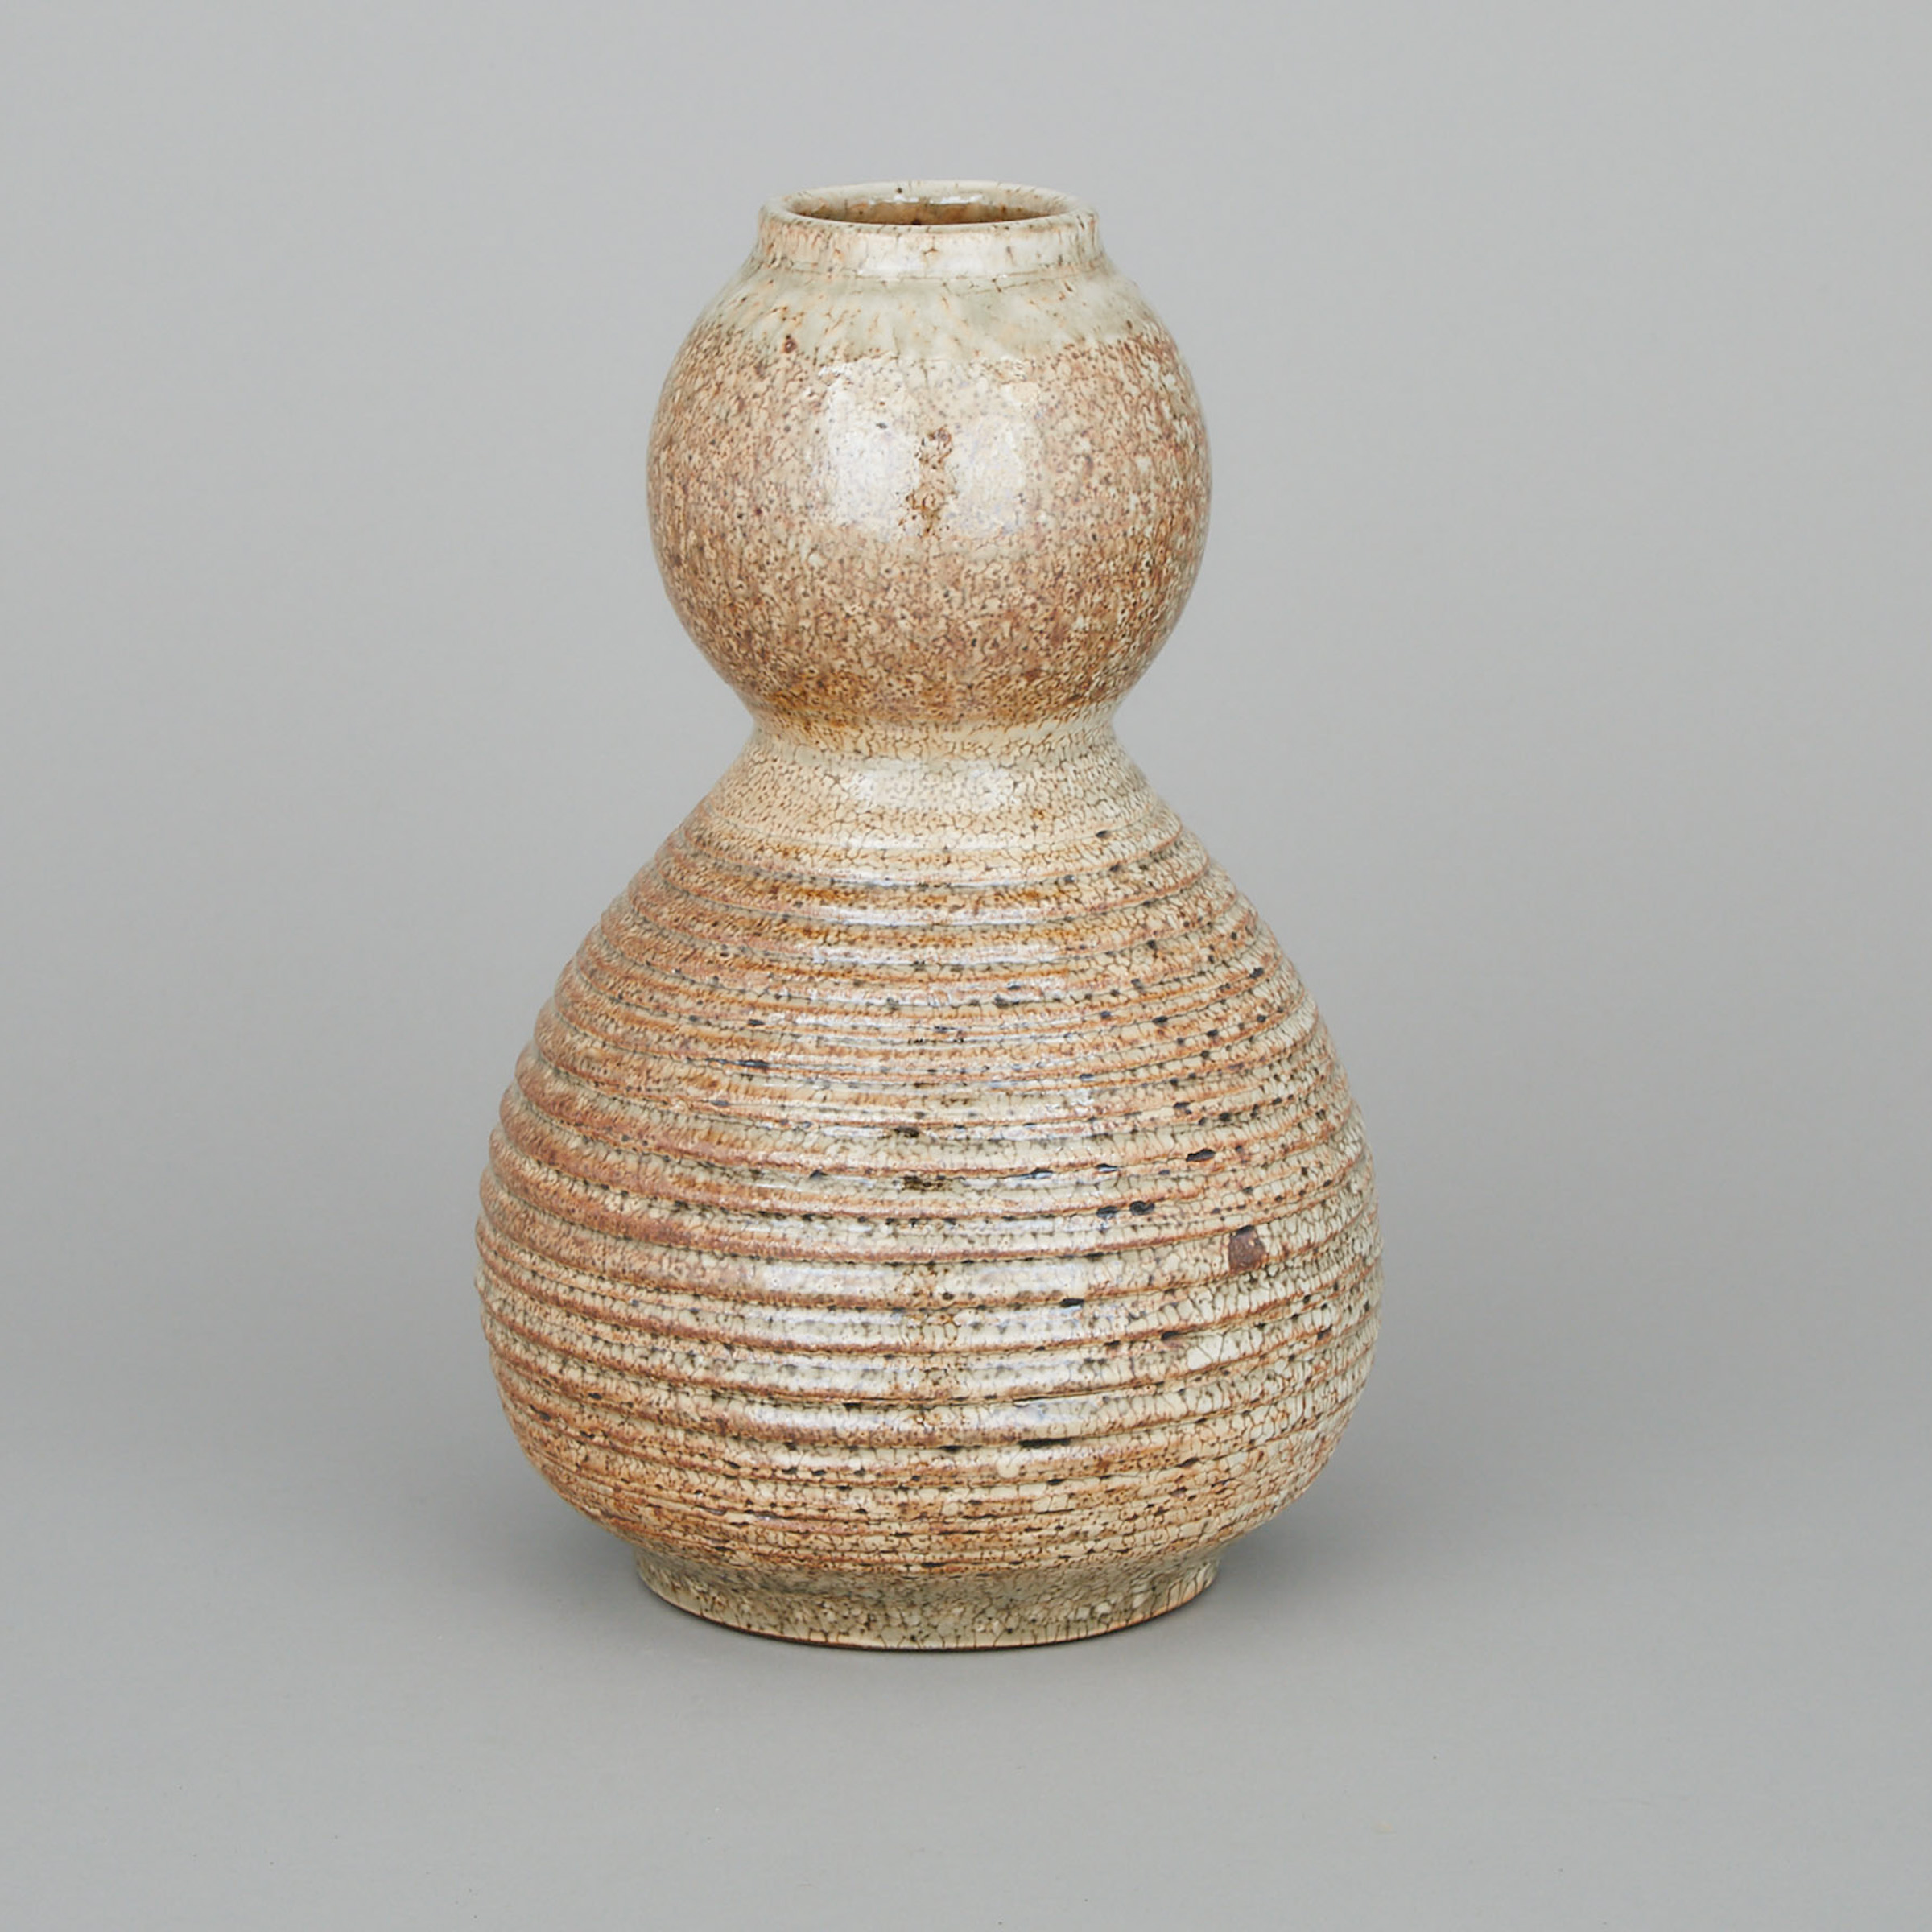 Robert Archambeau (Canadian, b.1933), Stoneware Vase, early 21st century